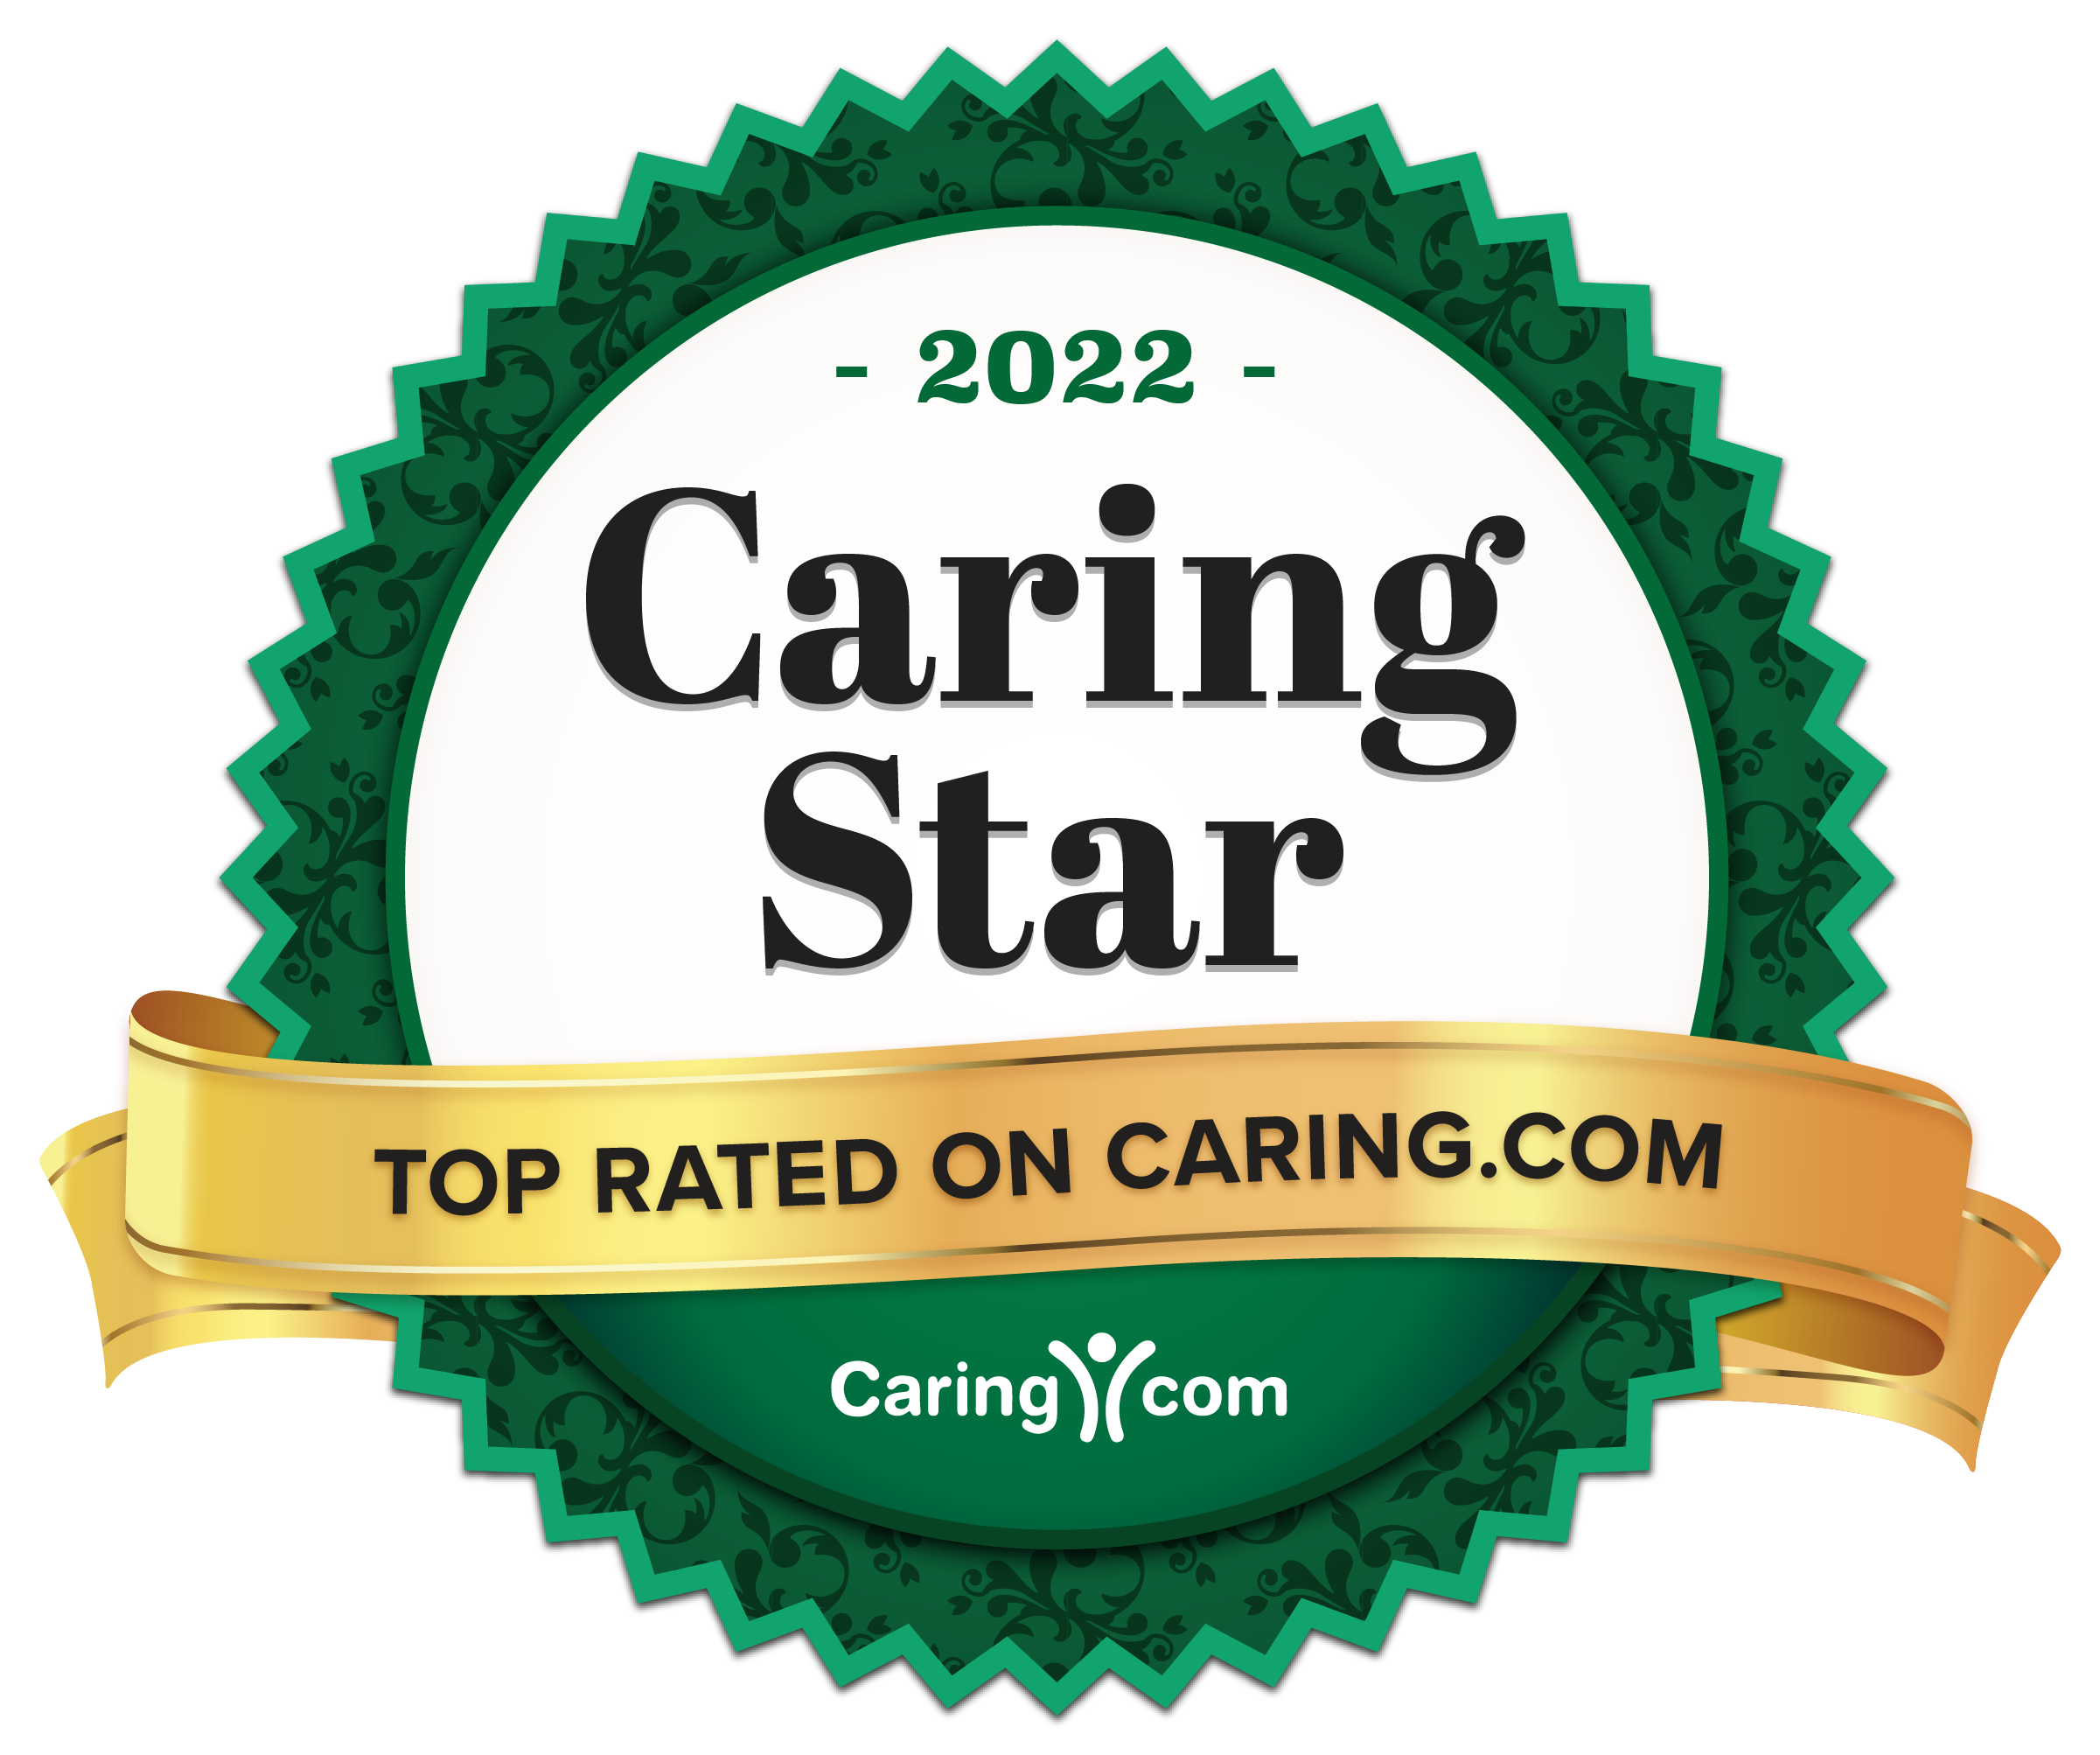 2022 Caring Star